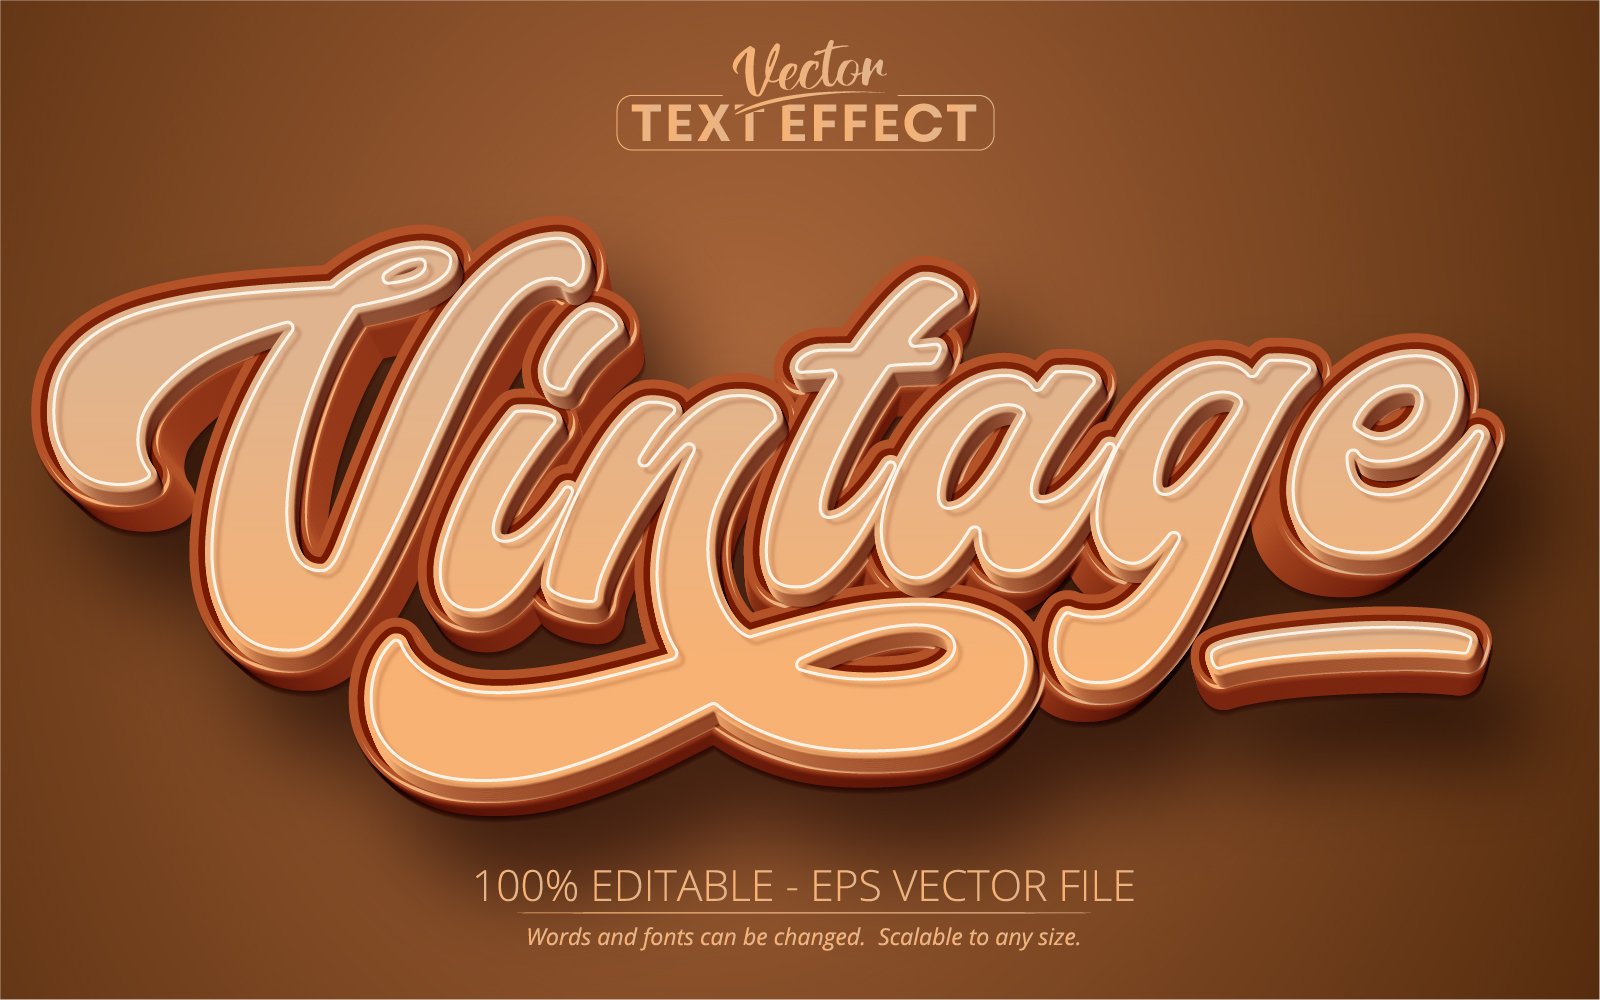 Vintage - Editable Text Effect, Retro 80s Text Style, Graphics Illustration